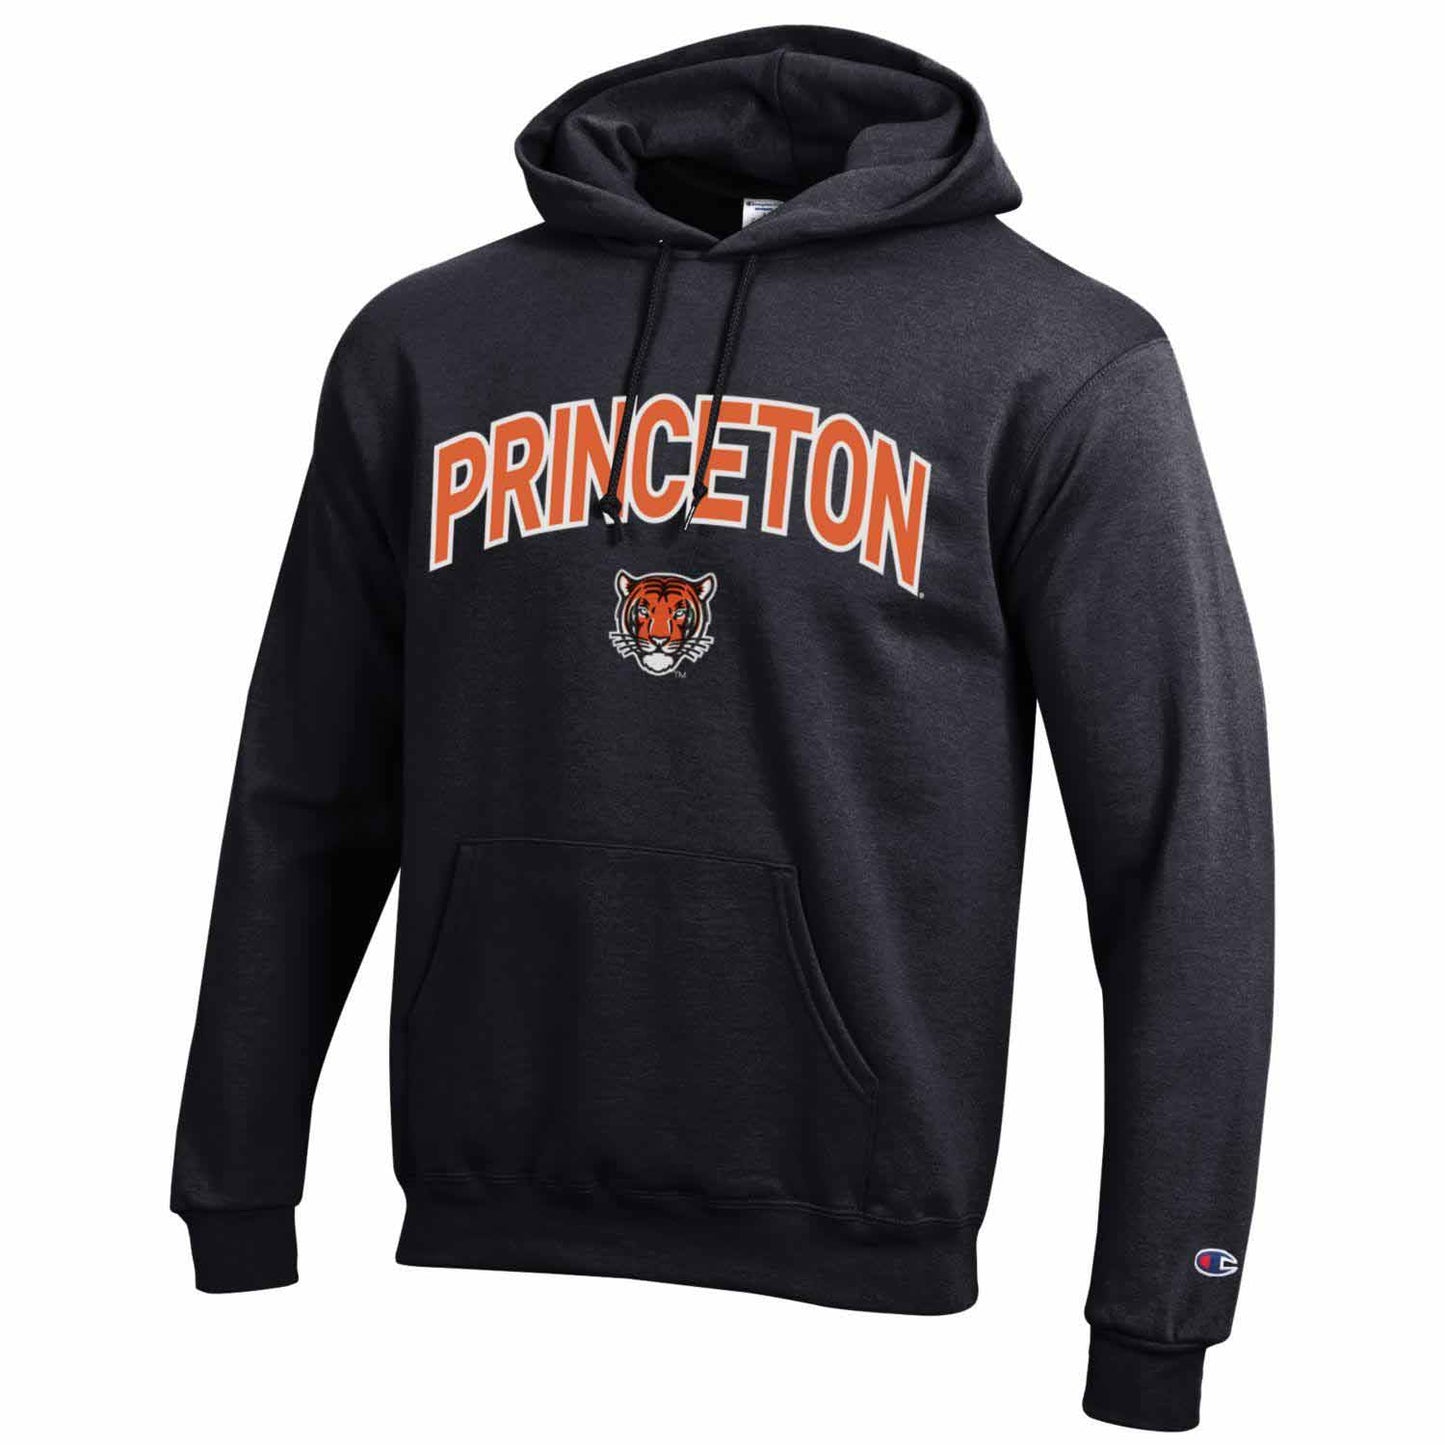 Princeton Tigers Champion Adult Tackle Twill Hooded Sweatshirt - Black